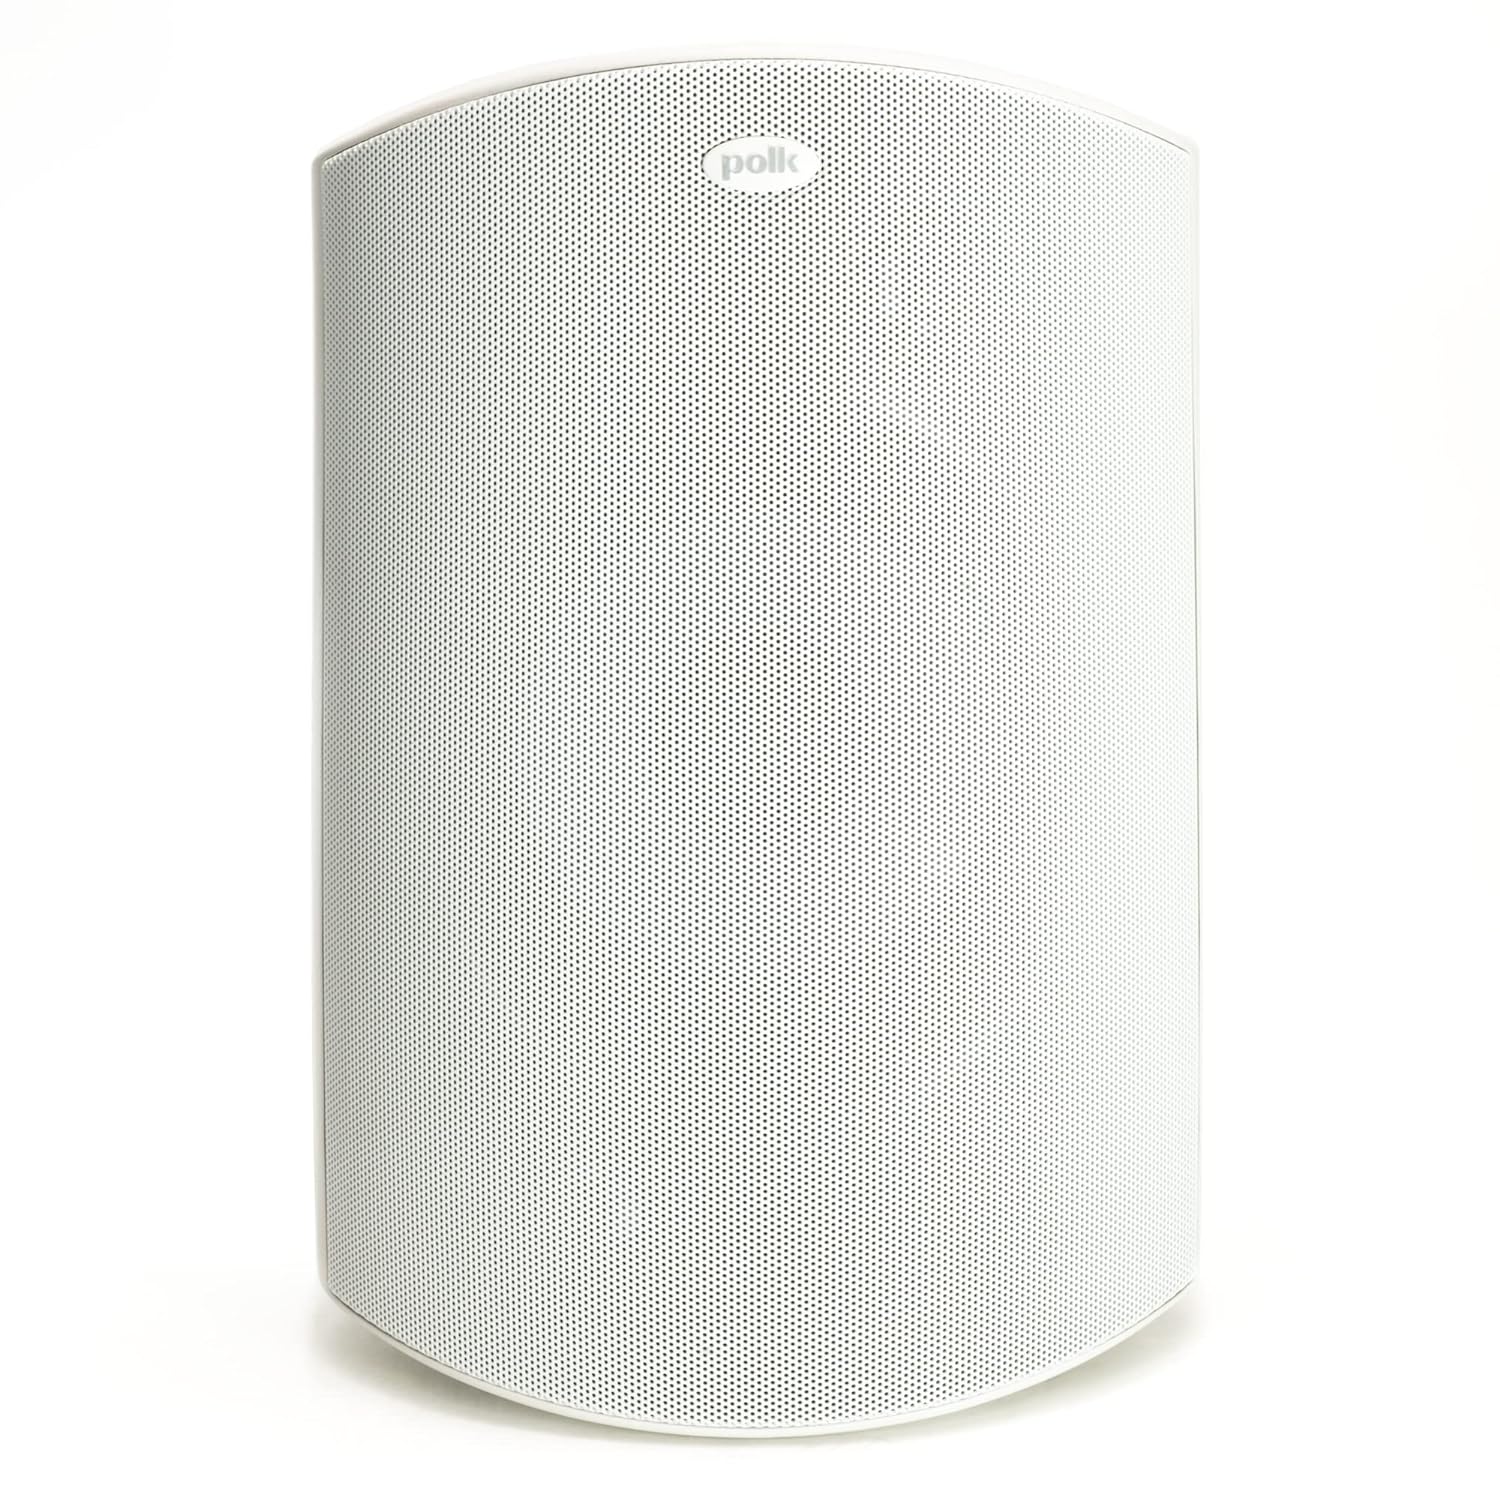 Polk Audio Atrium 8 SDI Flagship Outdoor All-Weather Speaker (White) - Use as Single Unit or Stereo Pair | Powerful Bass & Br…